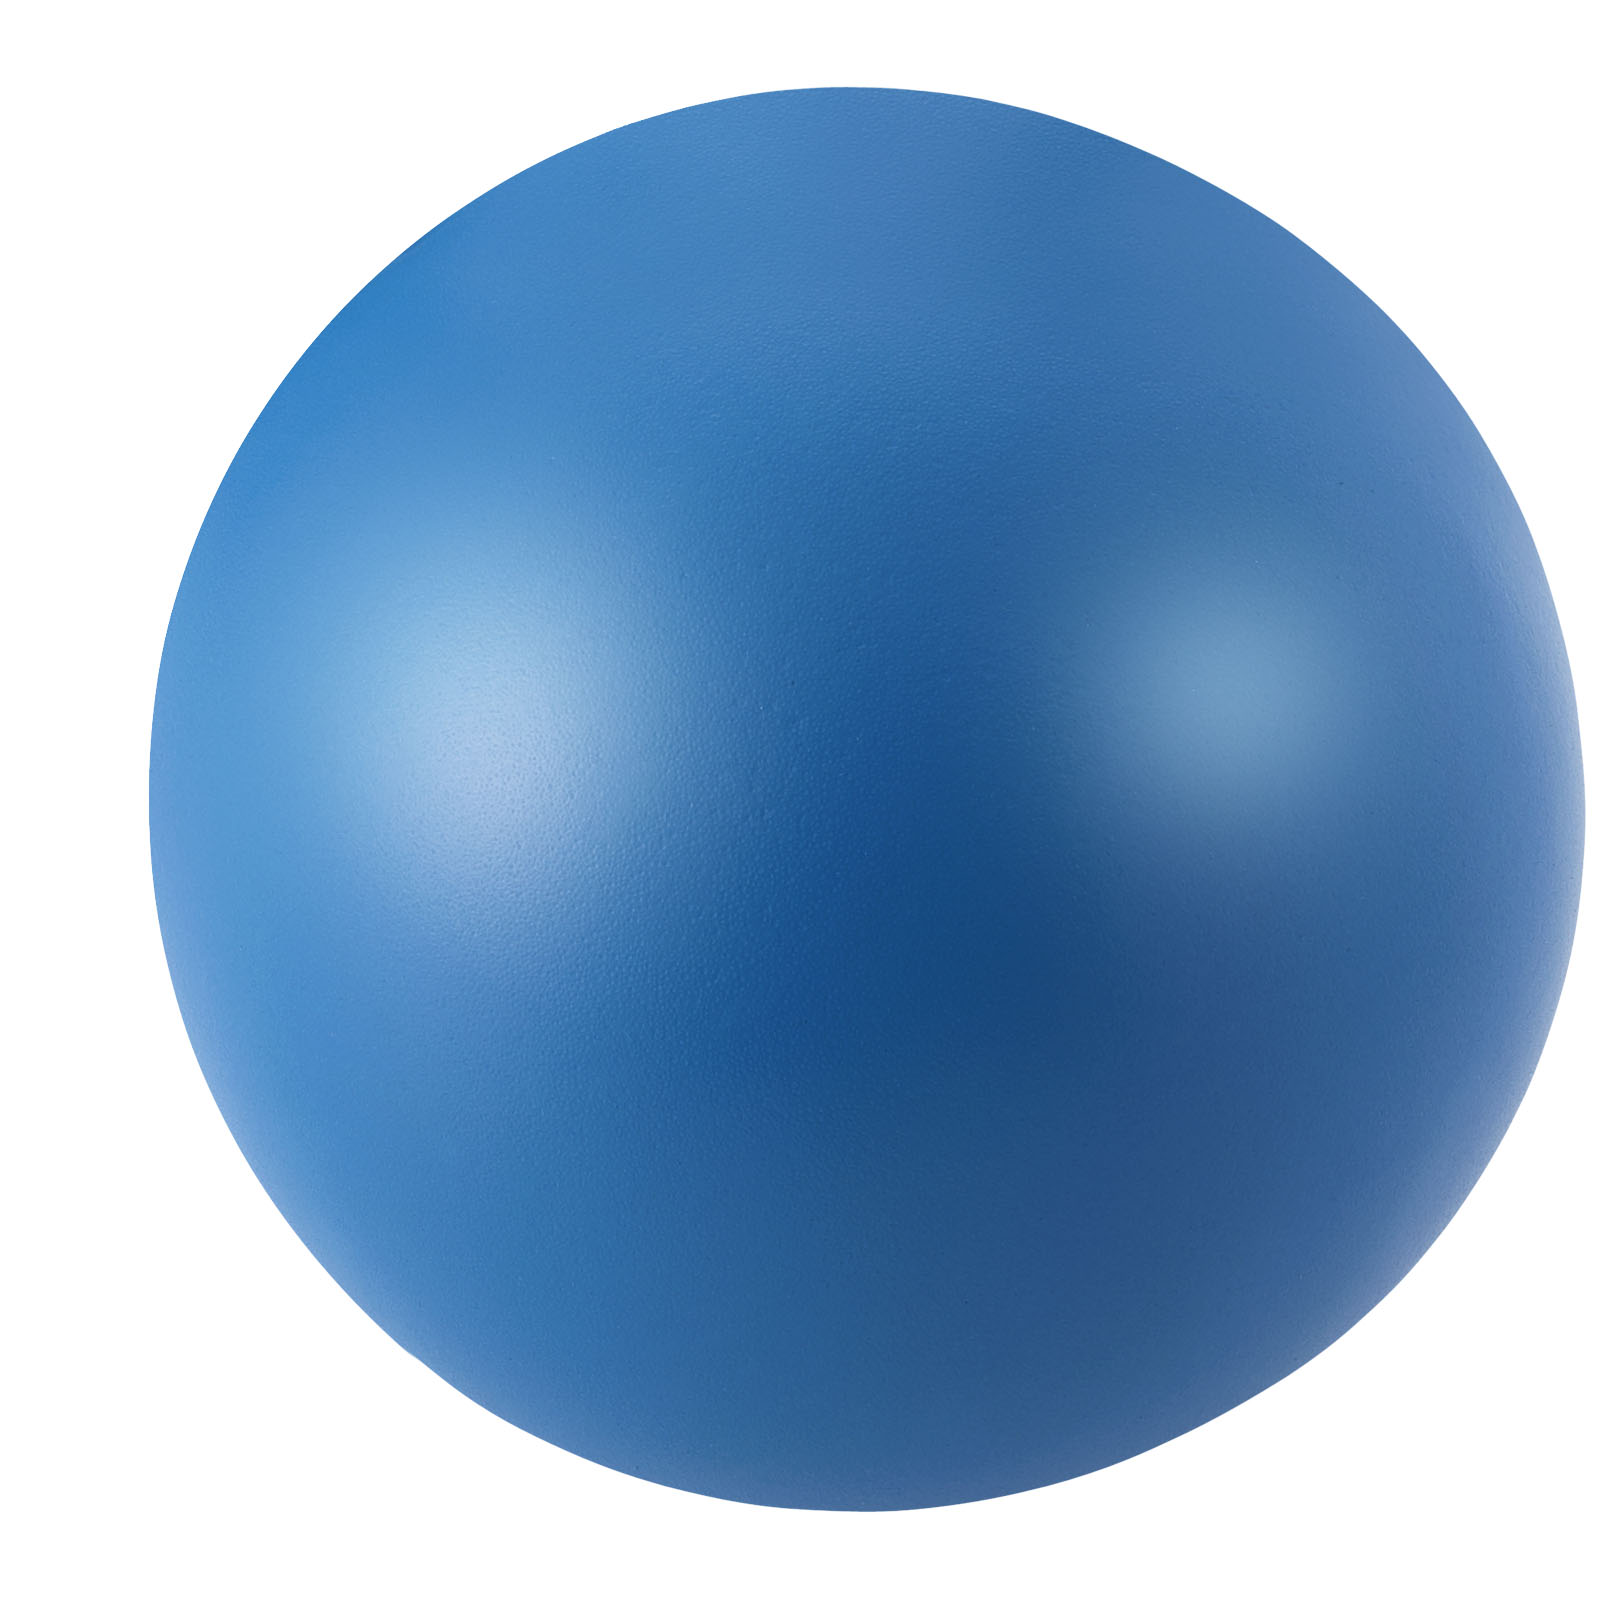 Stress Balls - Cool round stress reliever